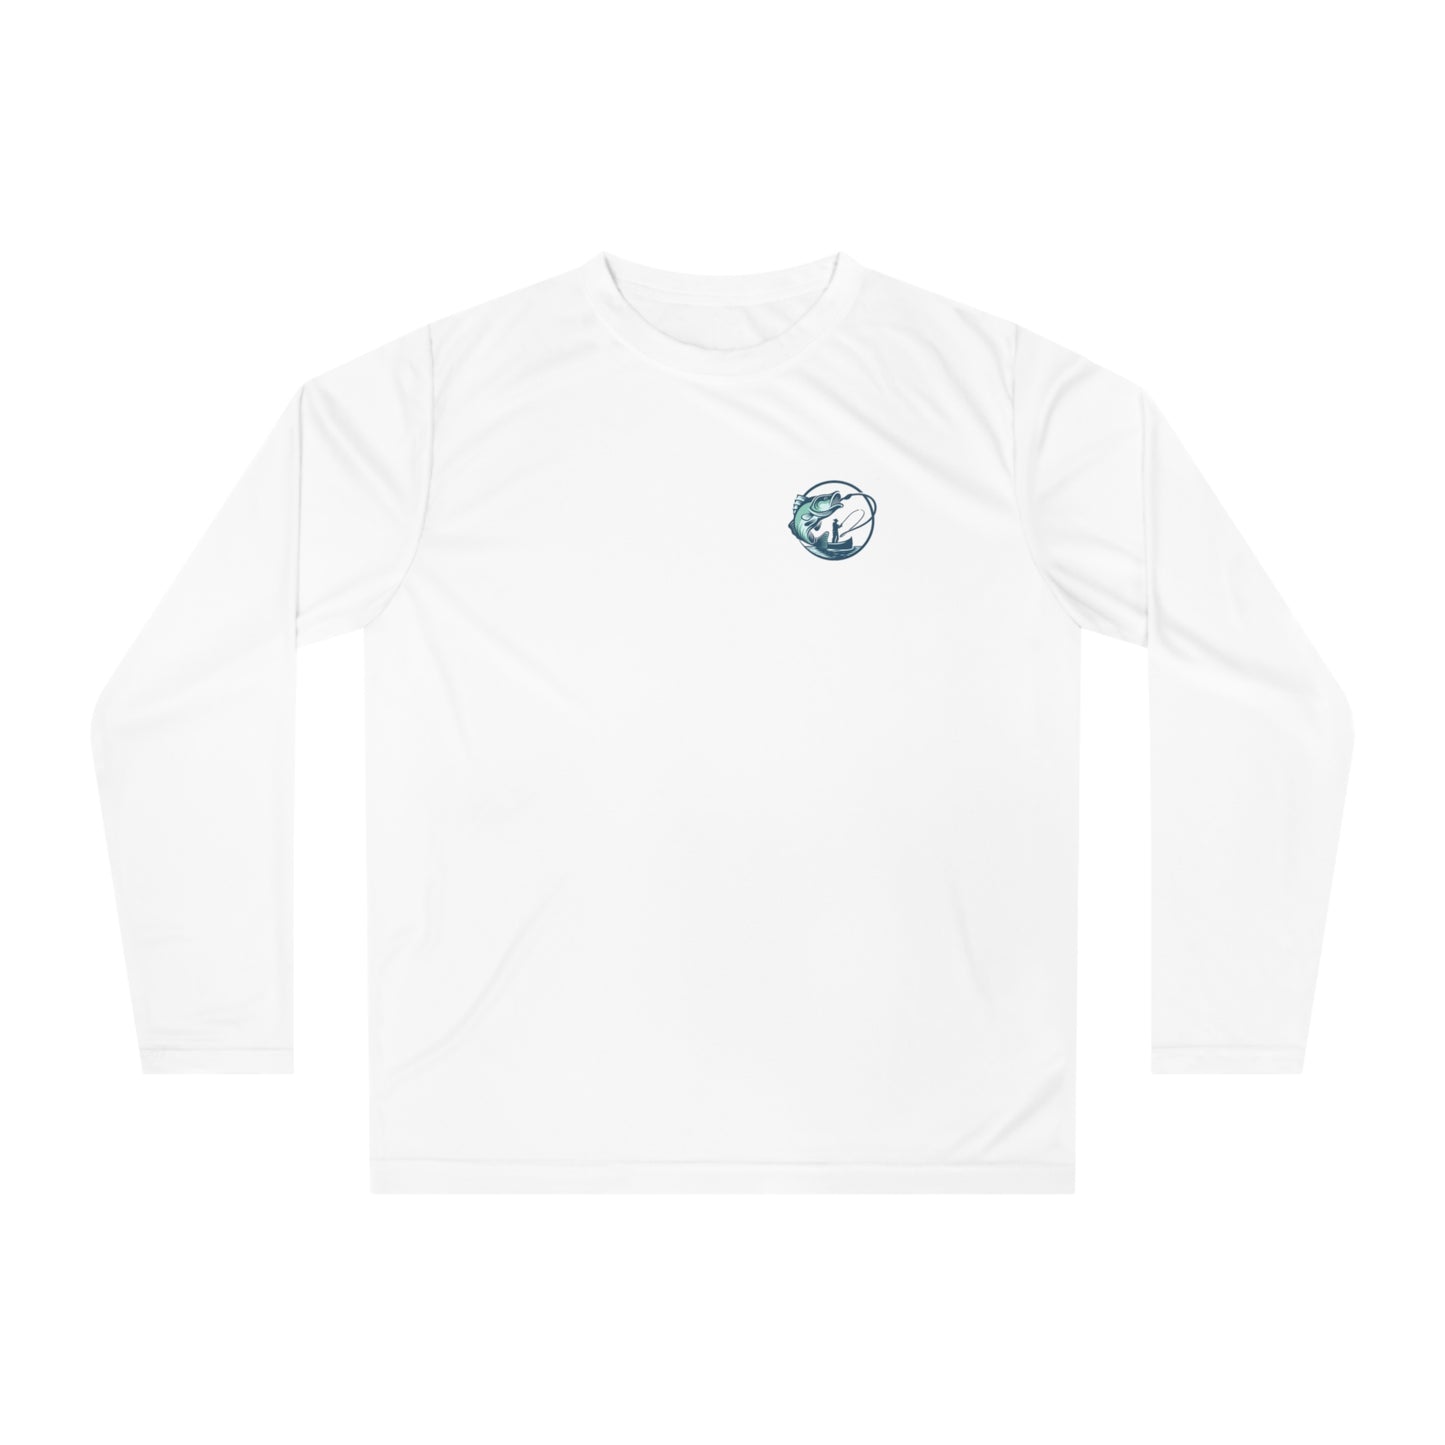 Montauk Fishing Capital Performance Shirt - UV Protection, Moisture-Wicking, Long-Sleeve